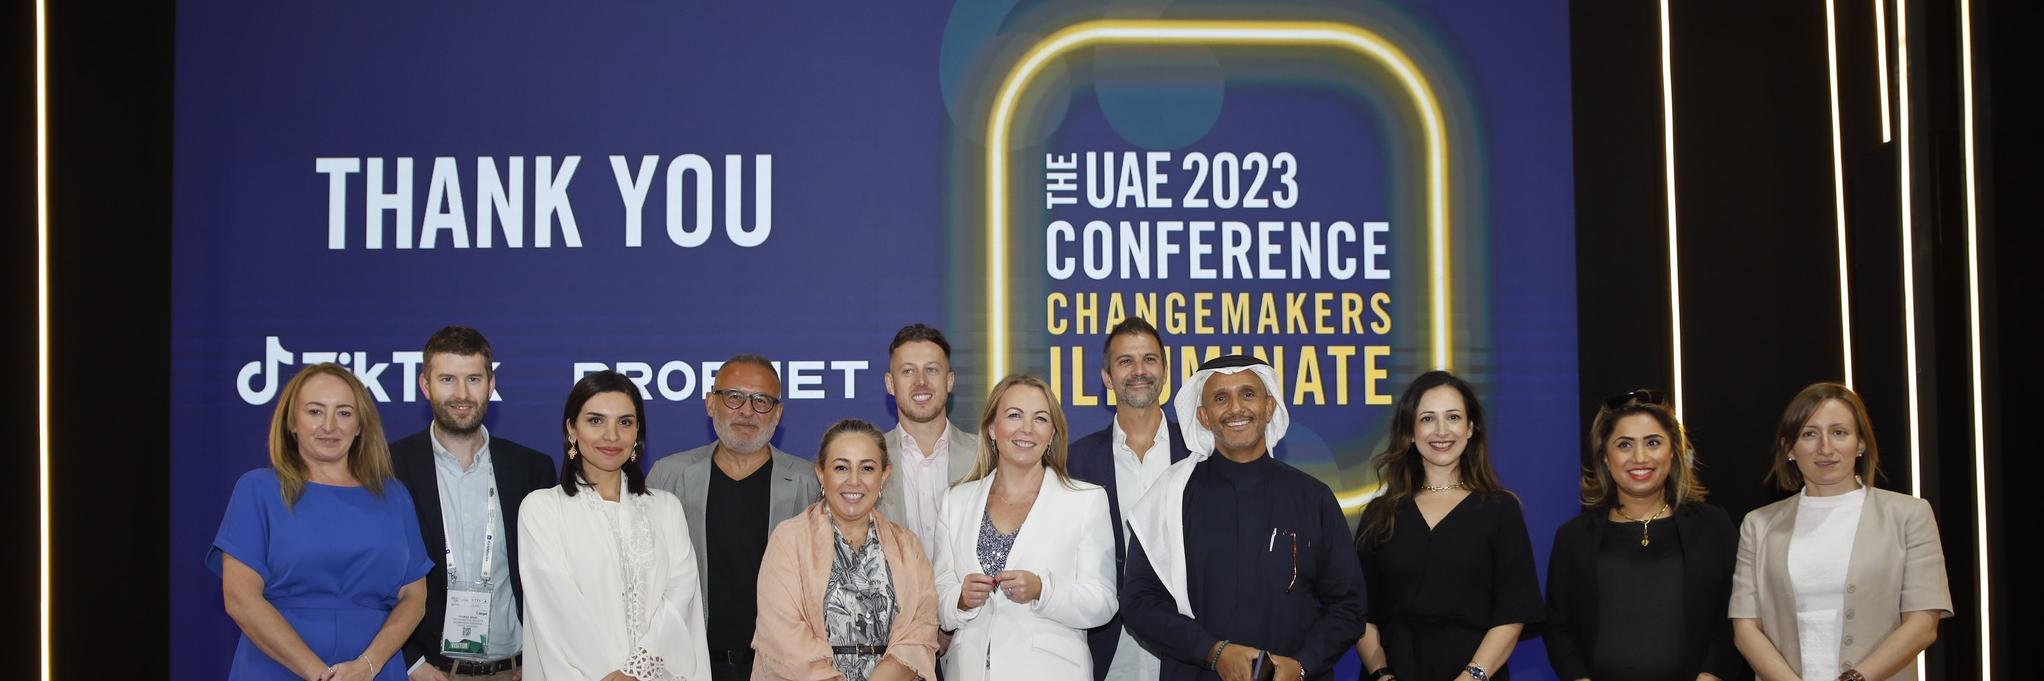 THE UAE CONFERNECE 2023